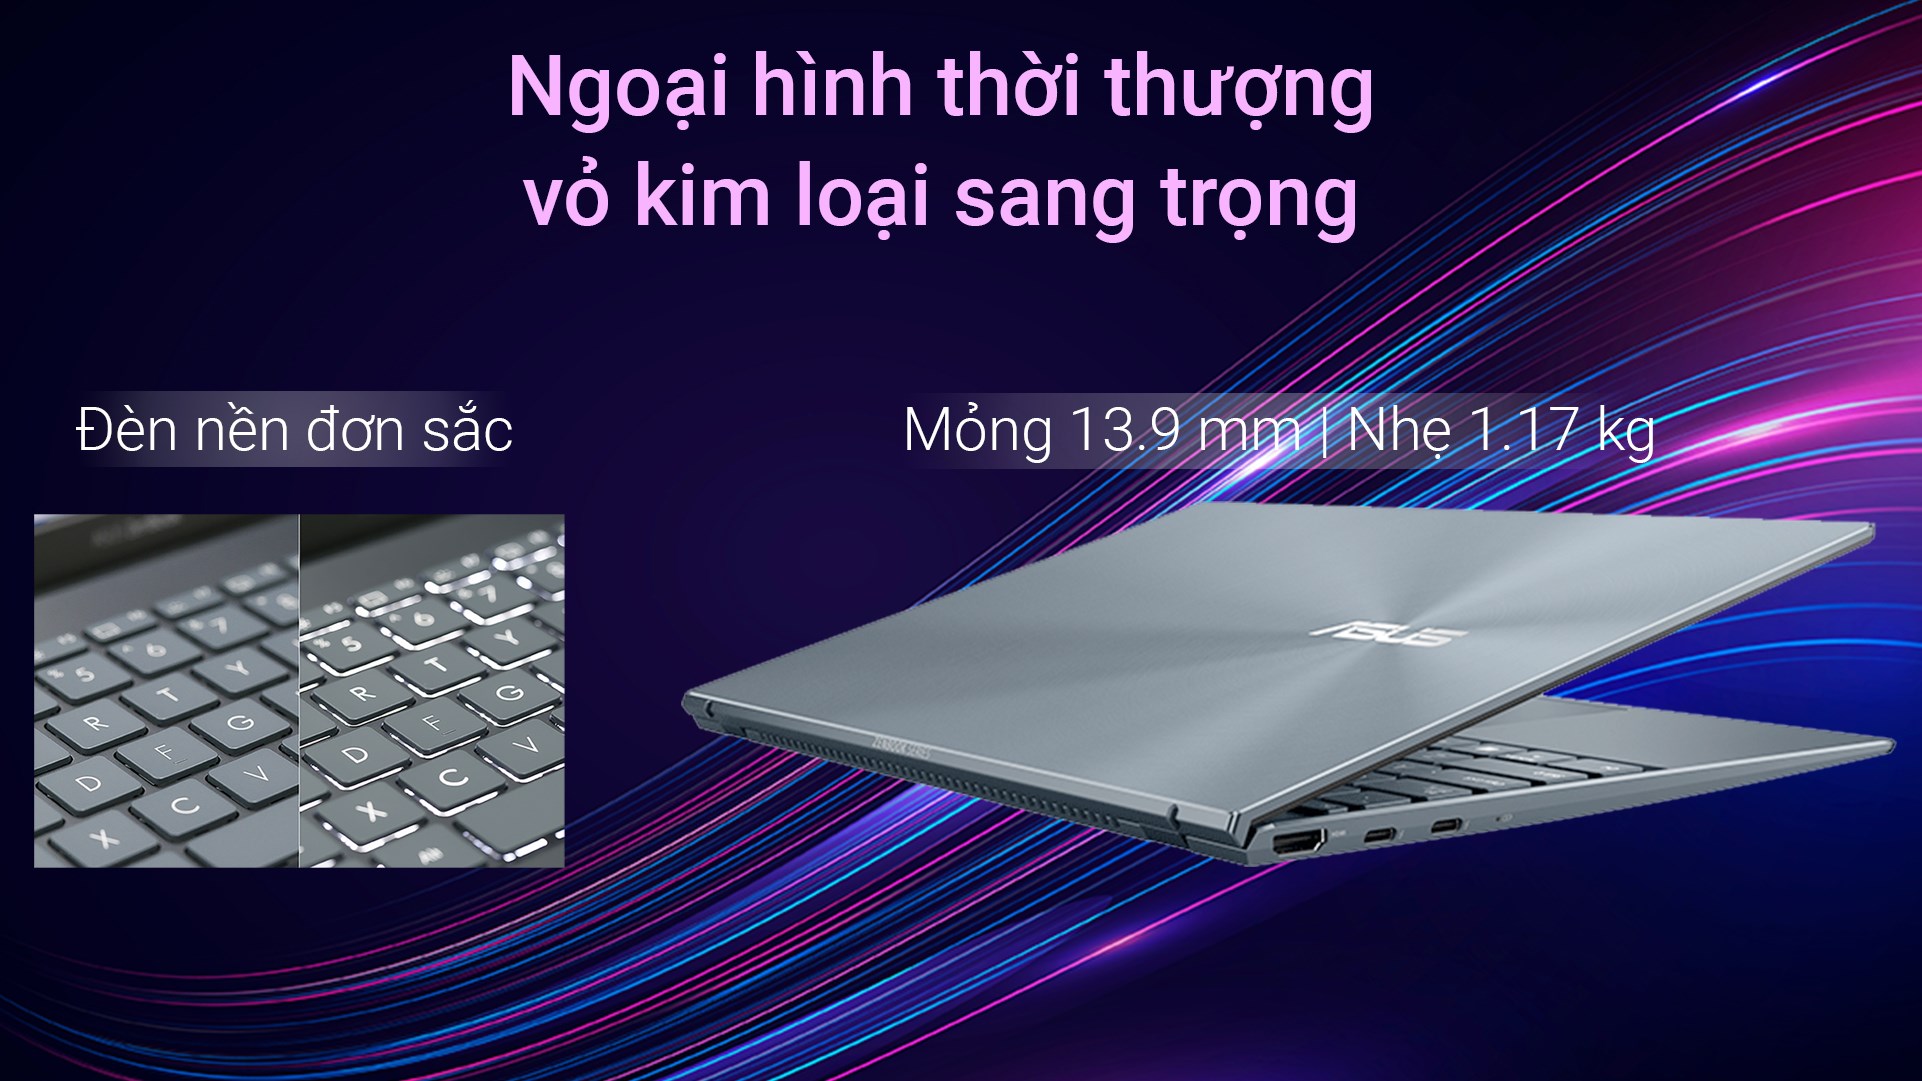 ASUS ZenBook UX425EA: Core i5 Gen11/8G/512G/14in FHD IPS/còn BH 2th !! - 3